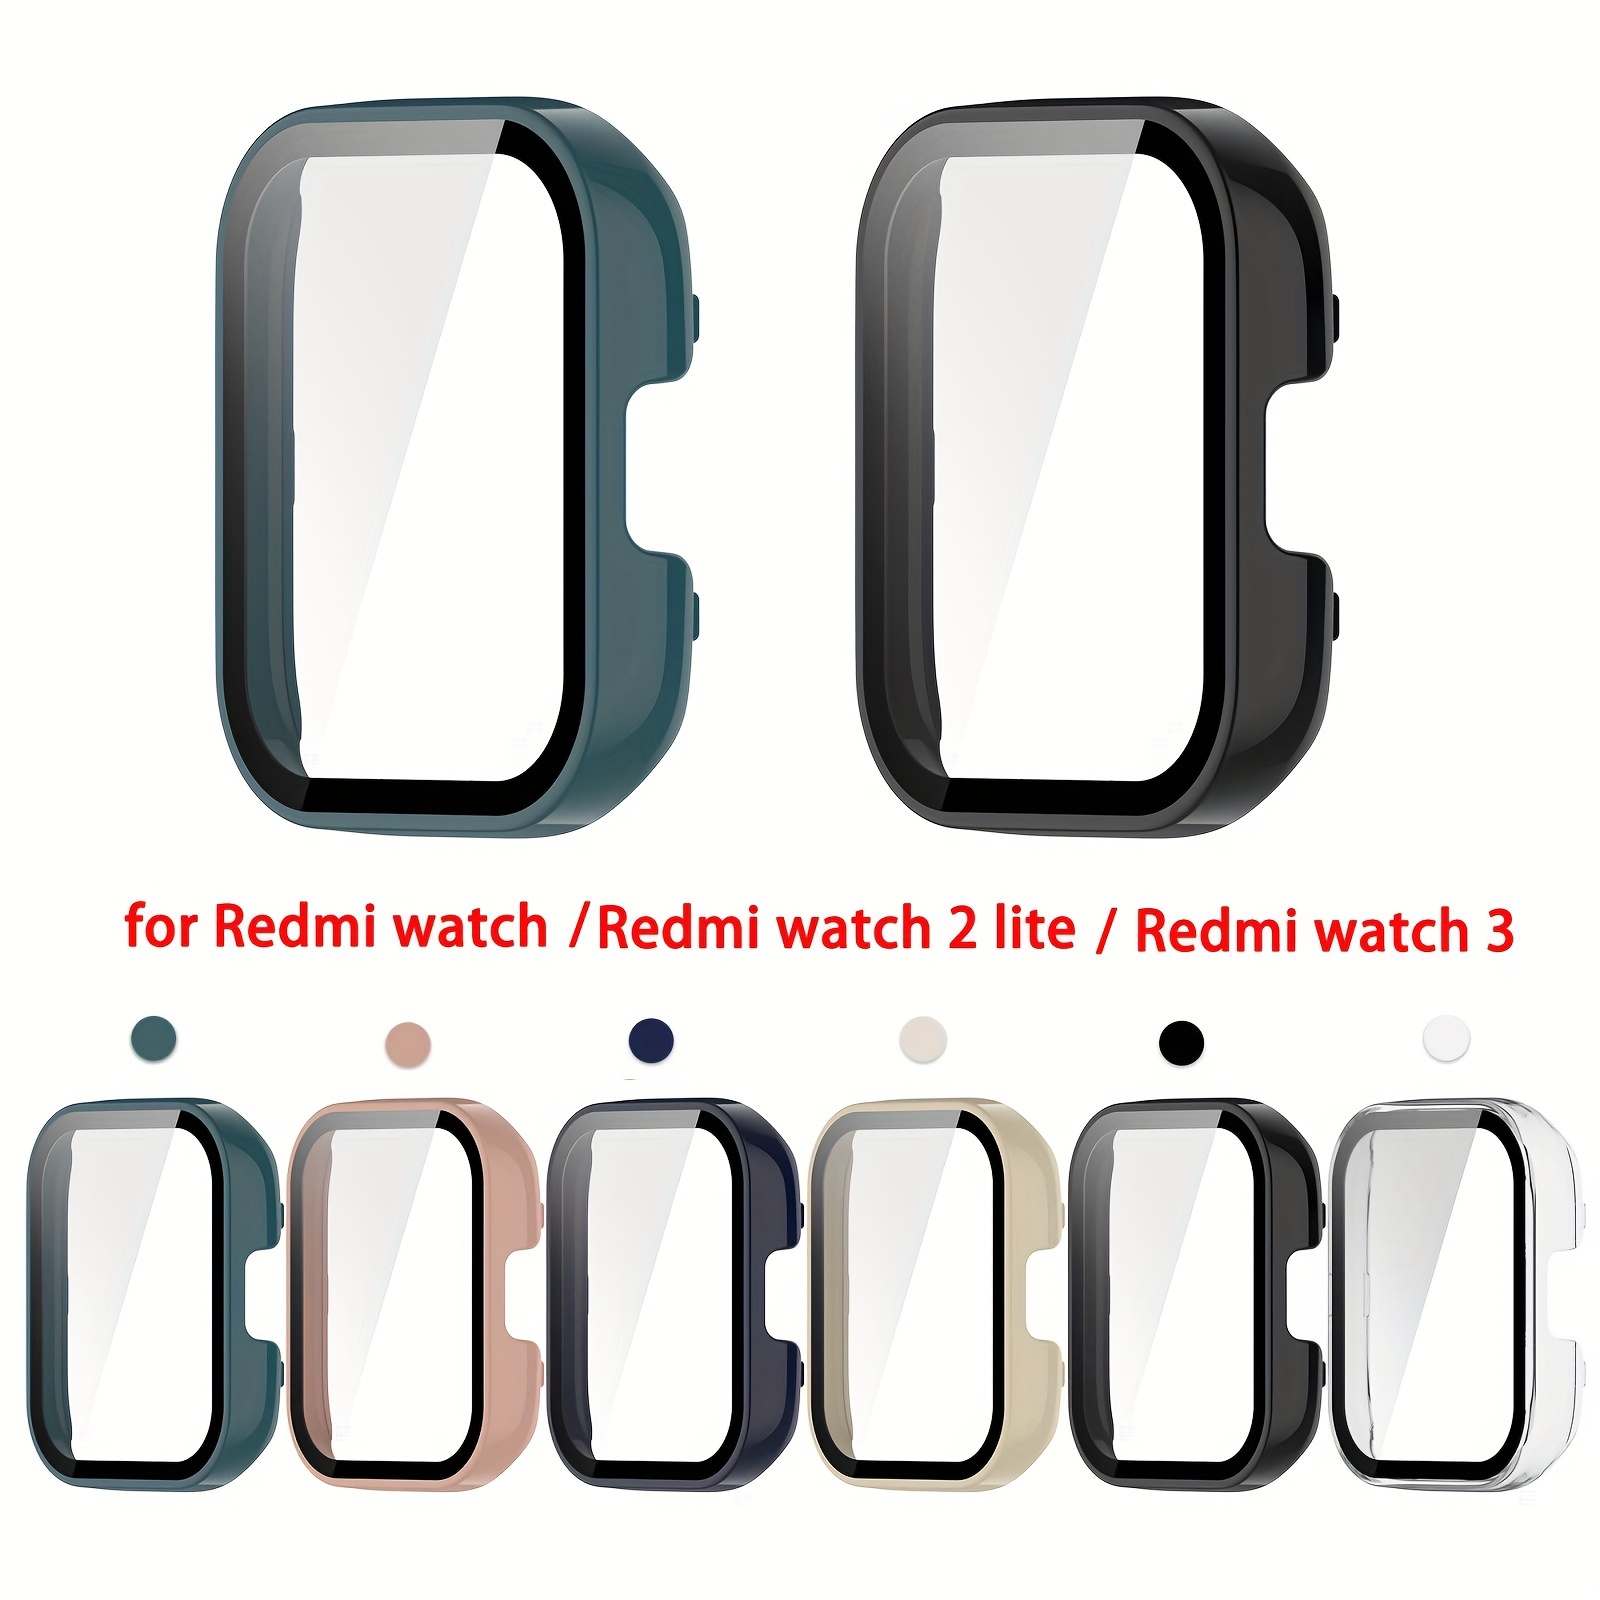 Protector para Redmi Watch 2 Lite.